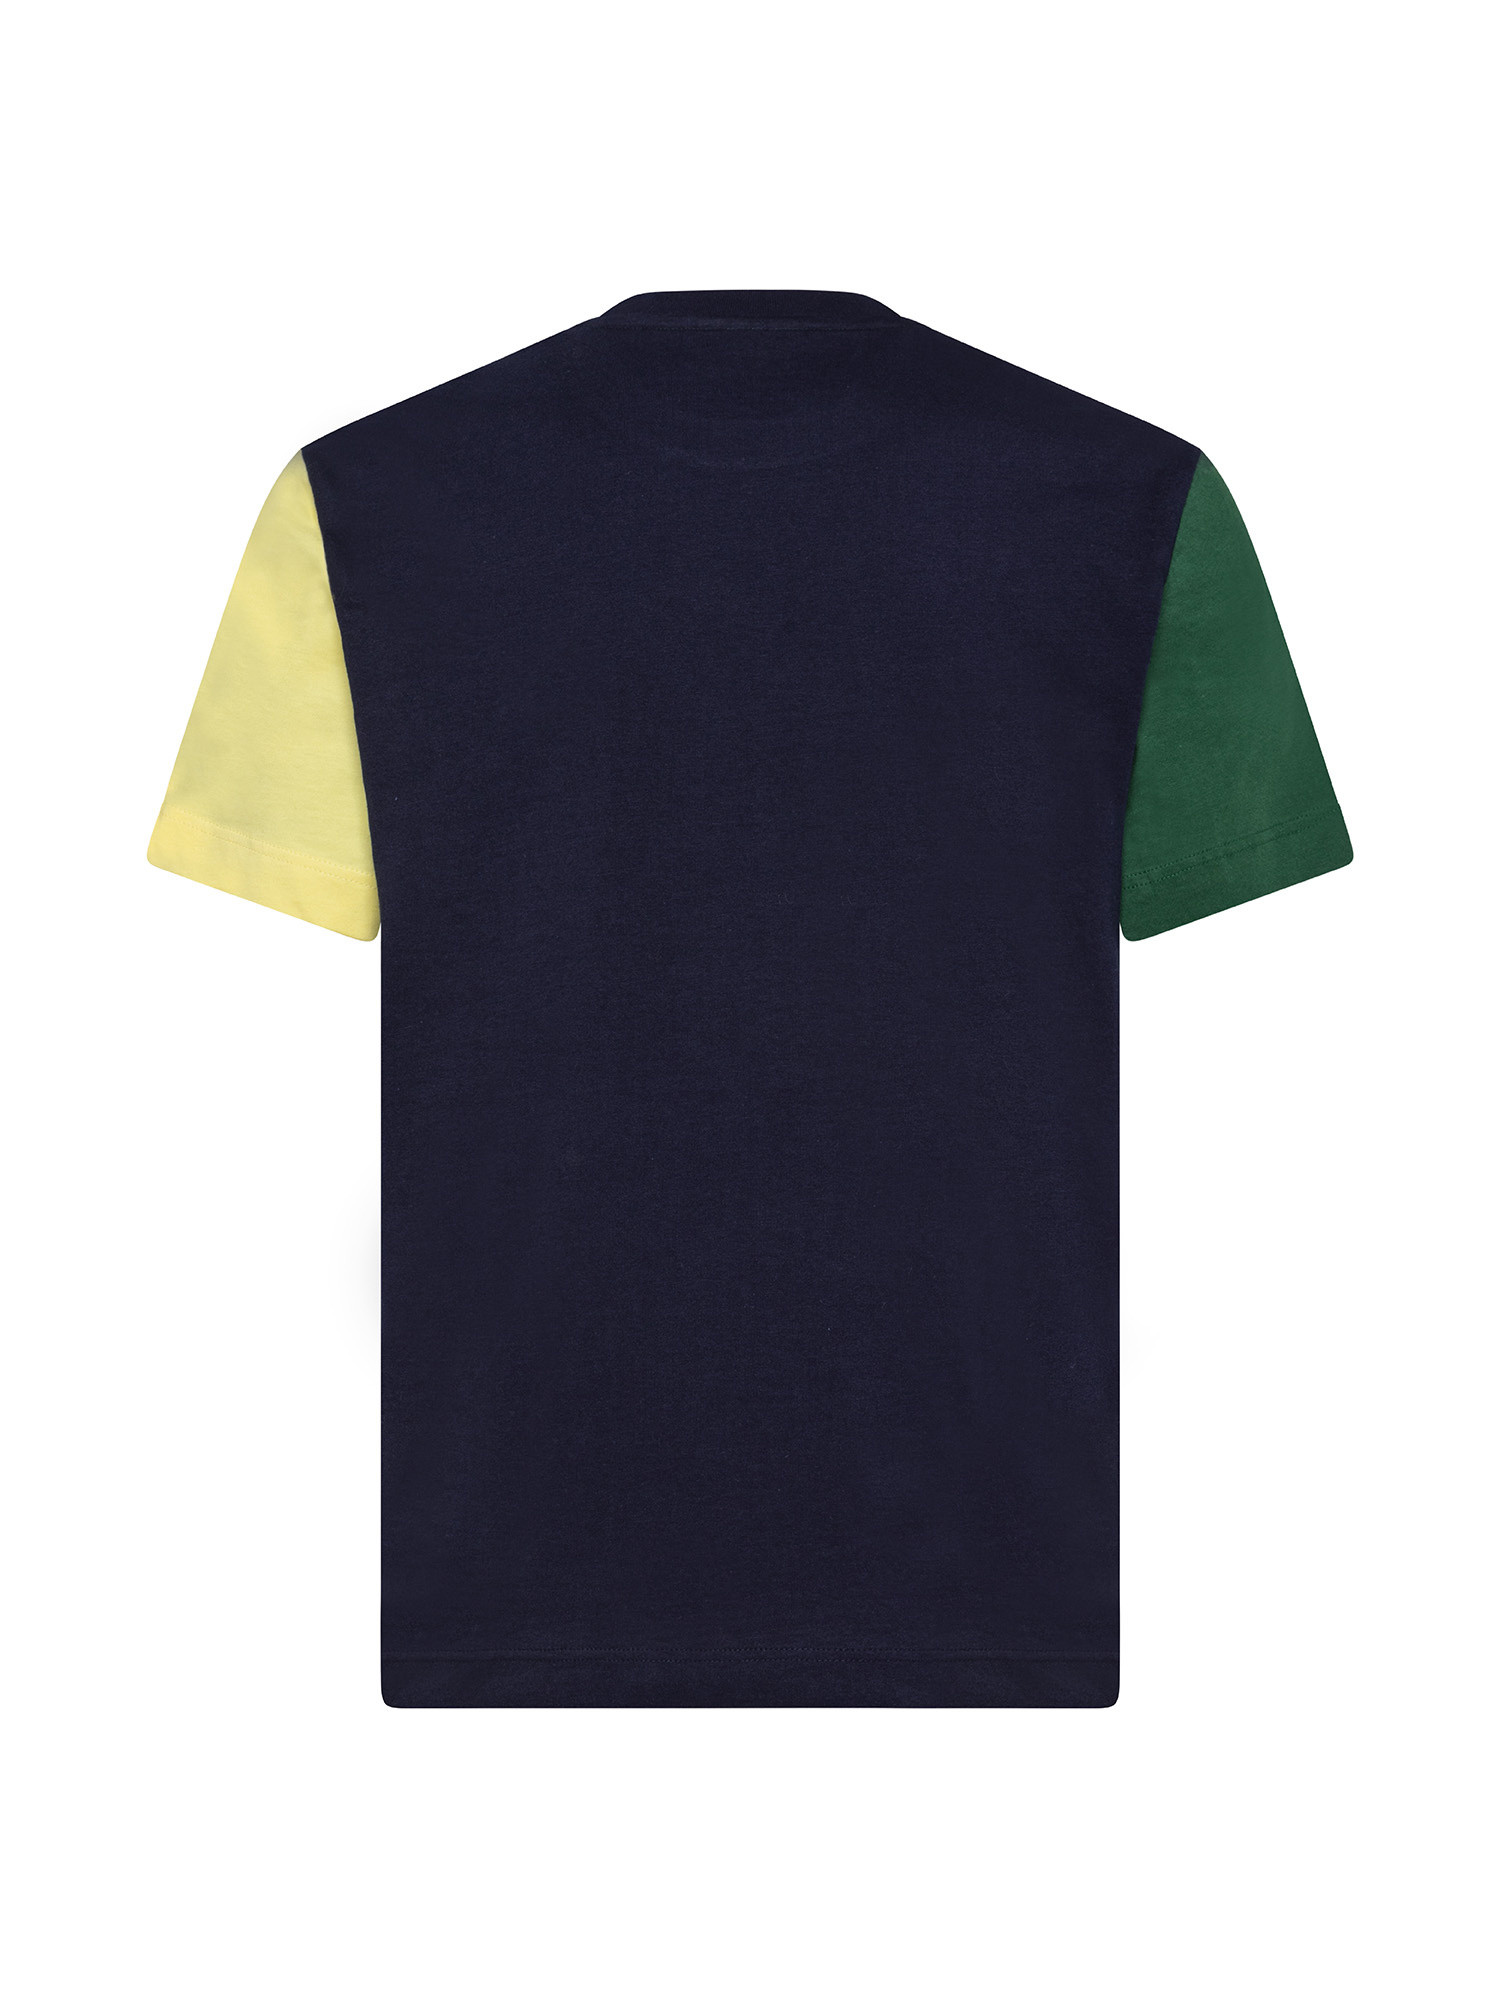 Lacoste - Regular fit color block cotton jersey T-shirt, Blue, large image number 1